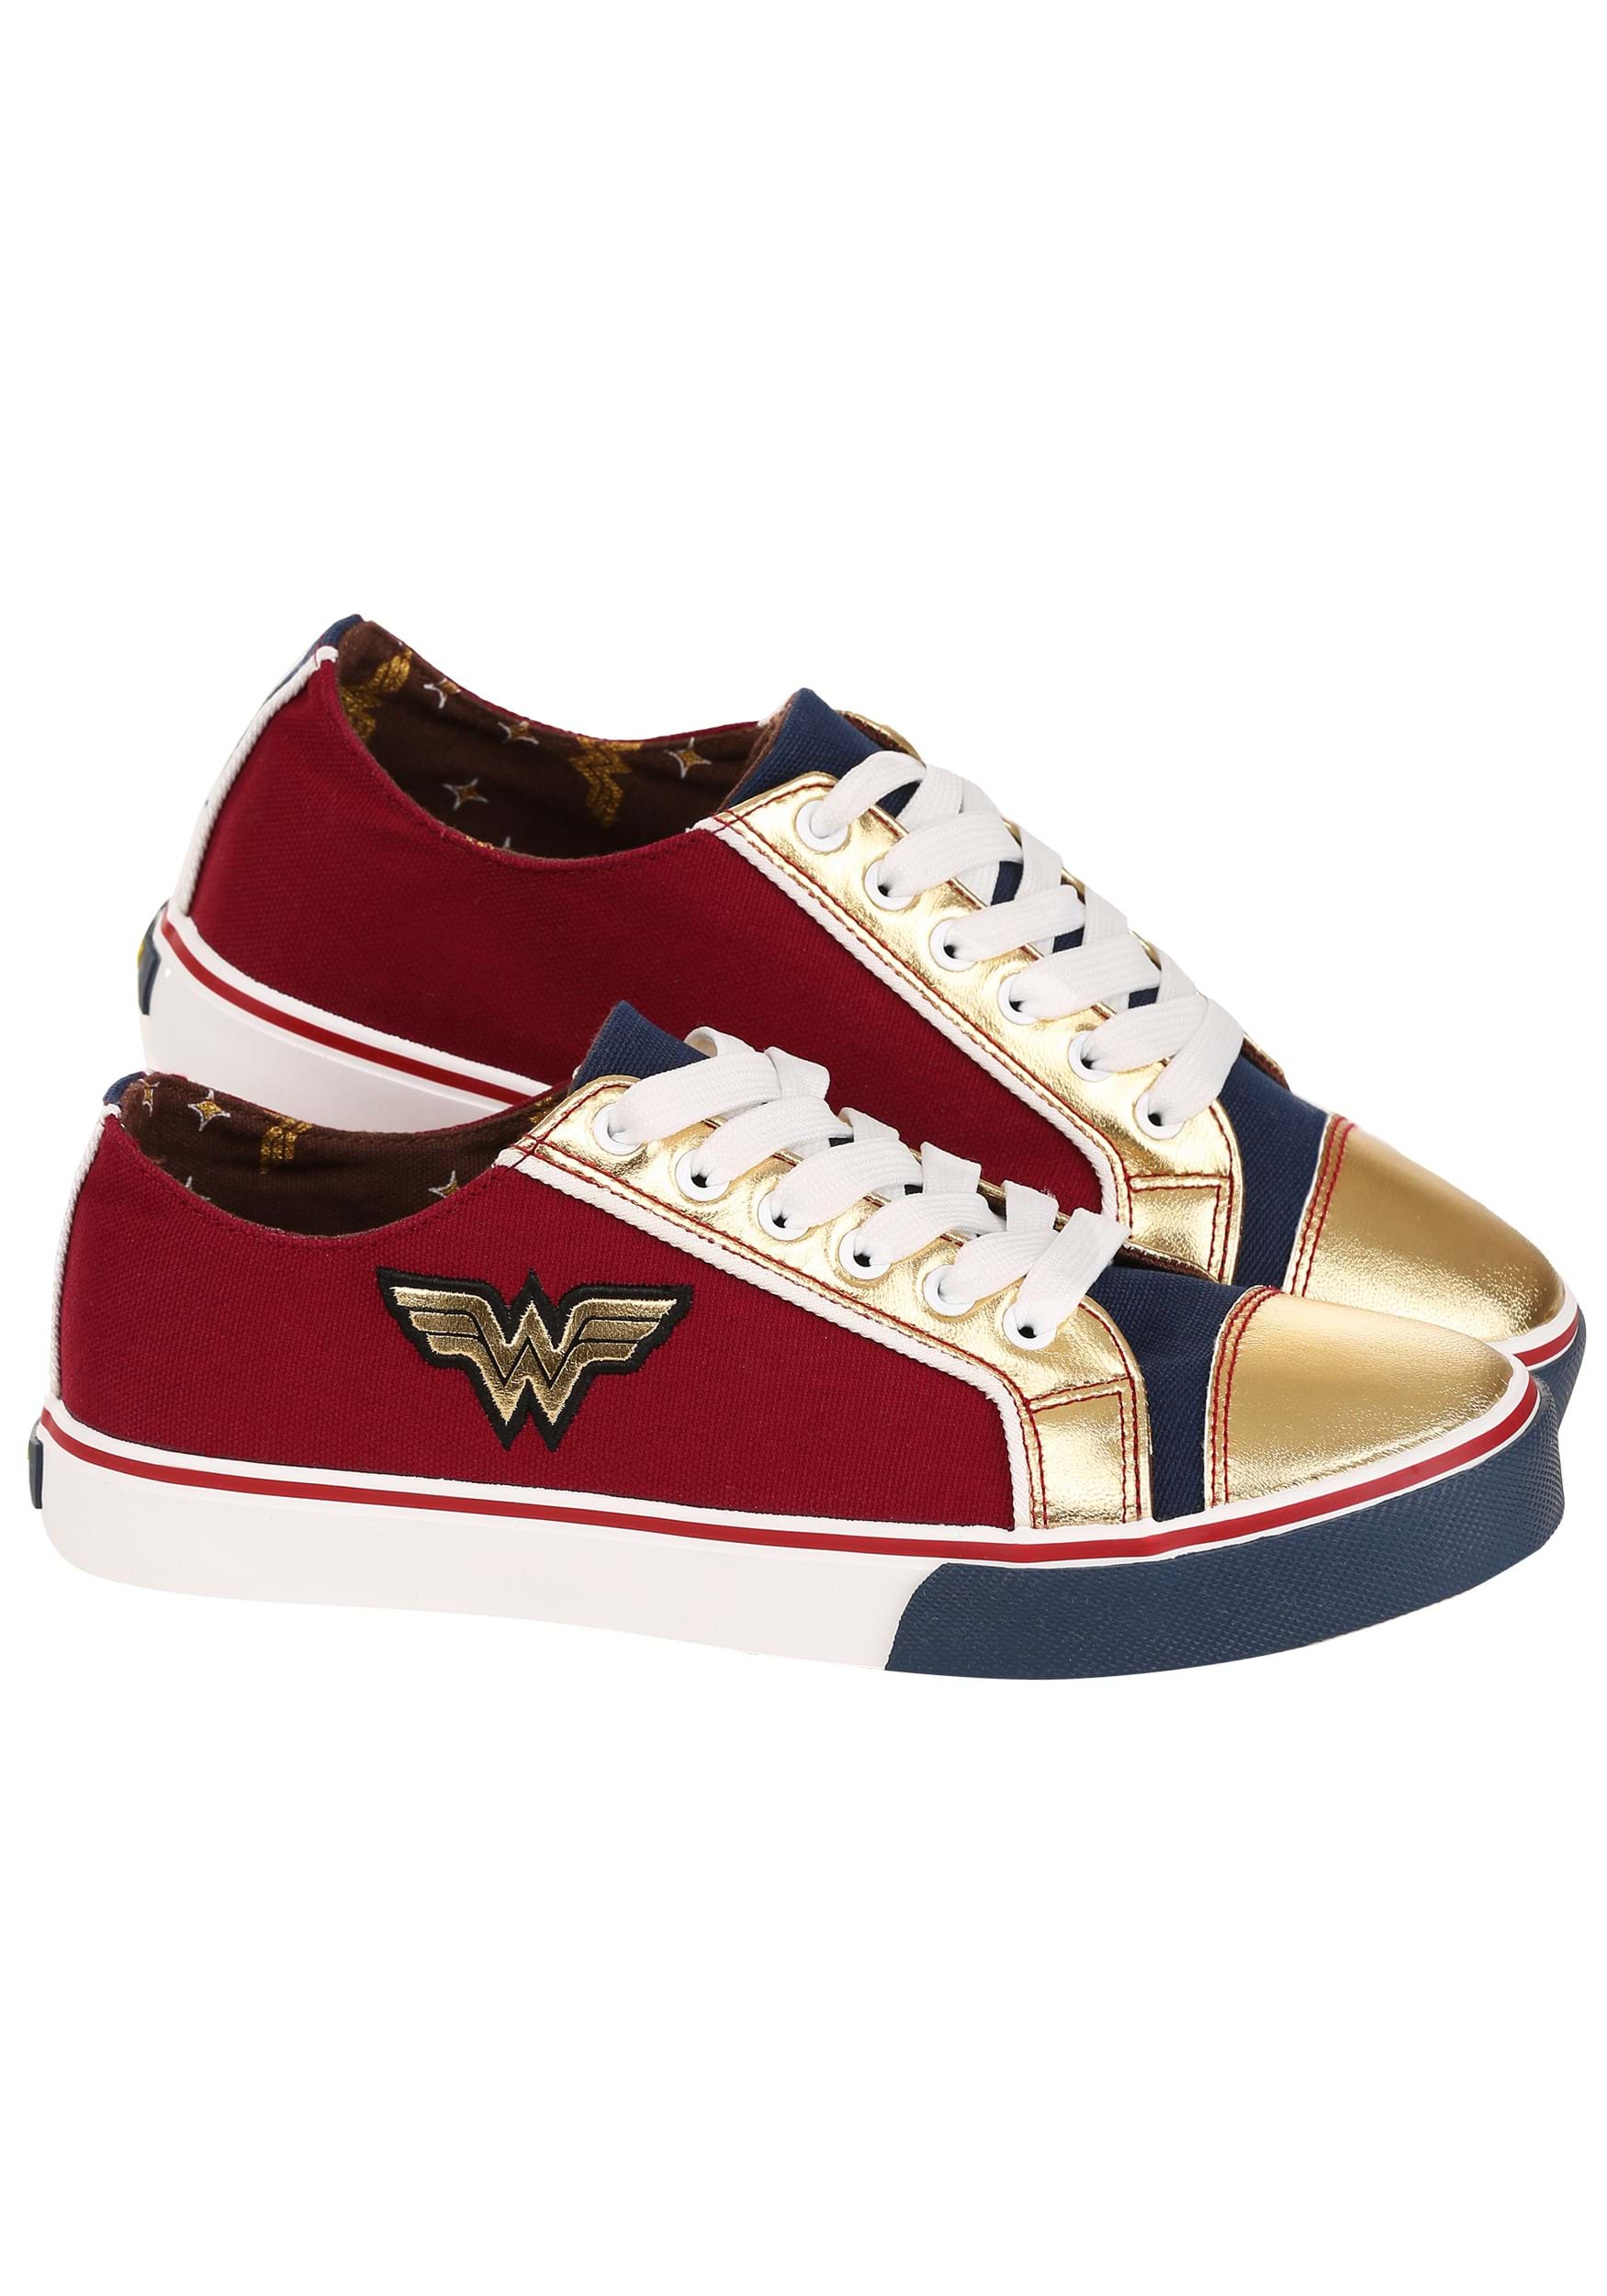 Fun.com's Exclusive Wonder Woman Sneakers